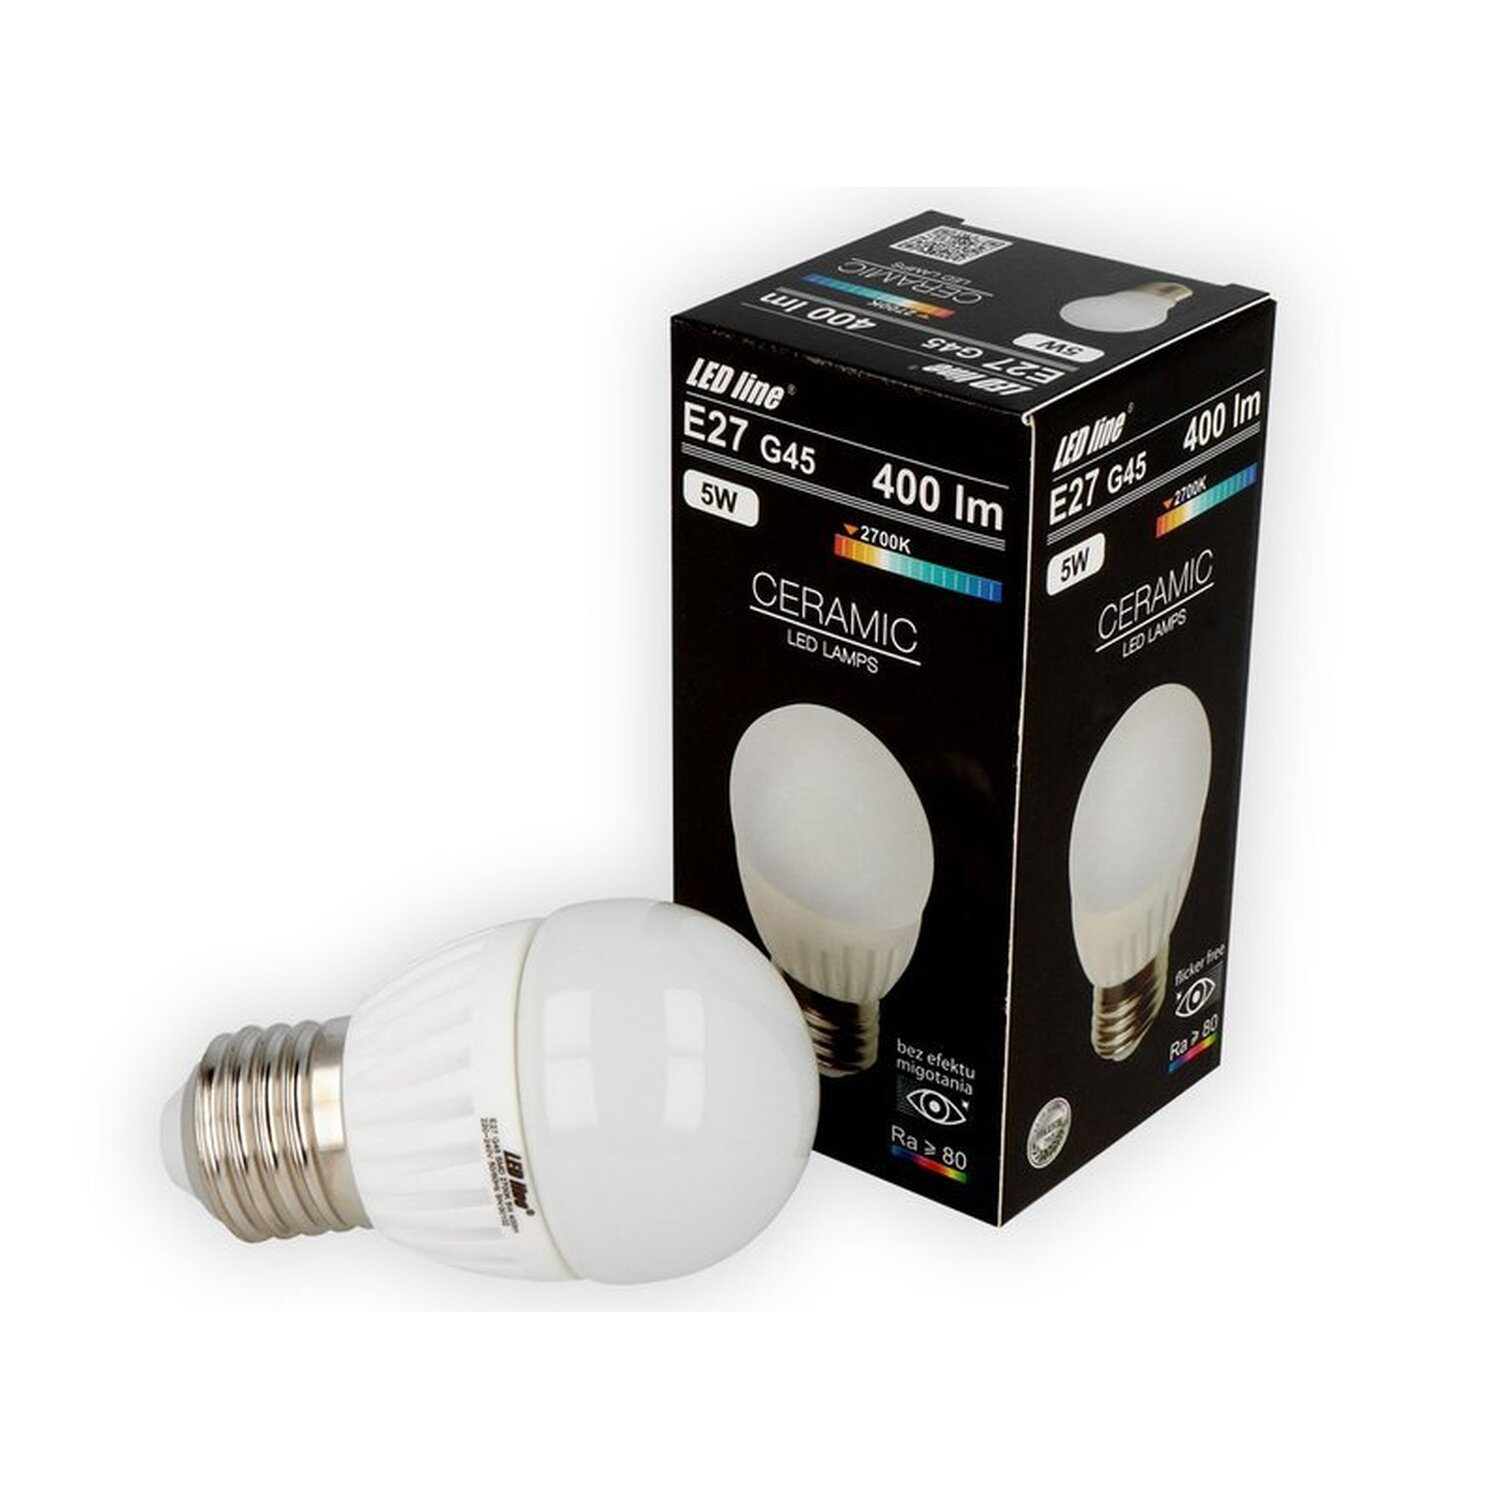 630 G45 LINE LED Ceramic 7W Stück Lumen E27 LED Warmweiß Leuchtmittel 10 LED